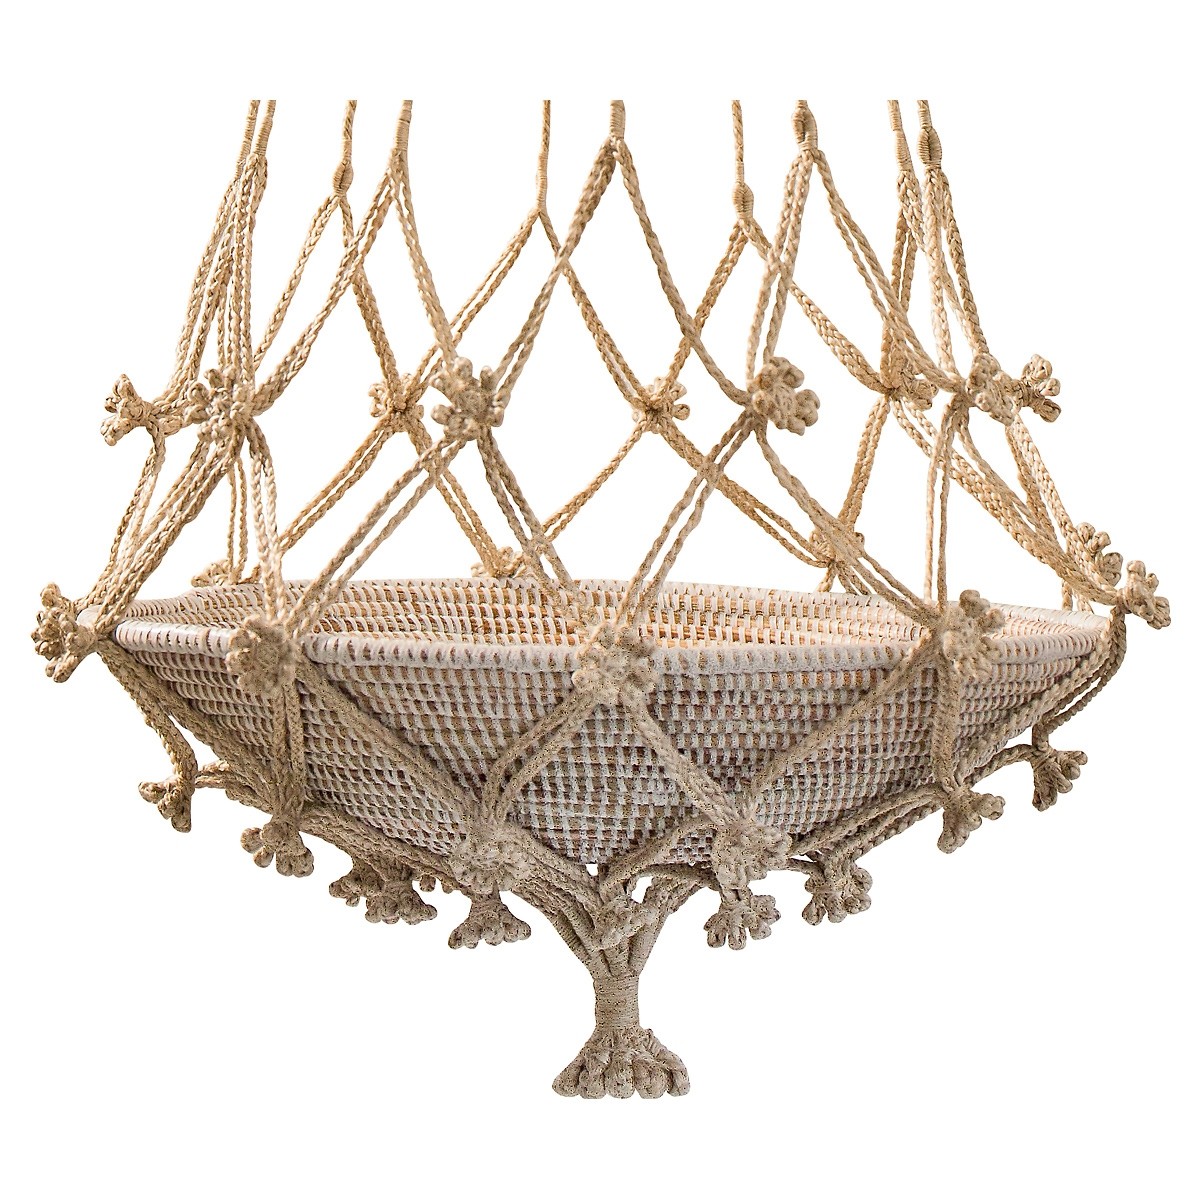 Afroart Jute for Hanging Baskets or Pots